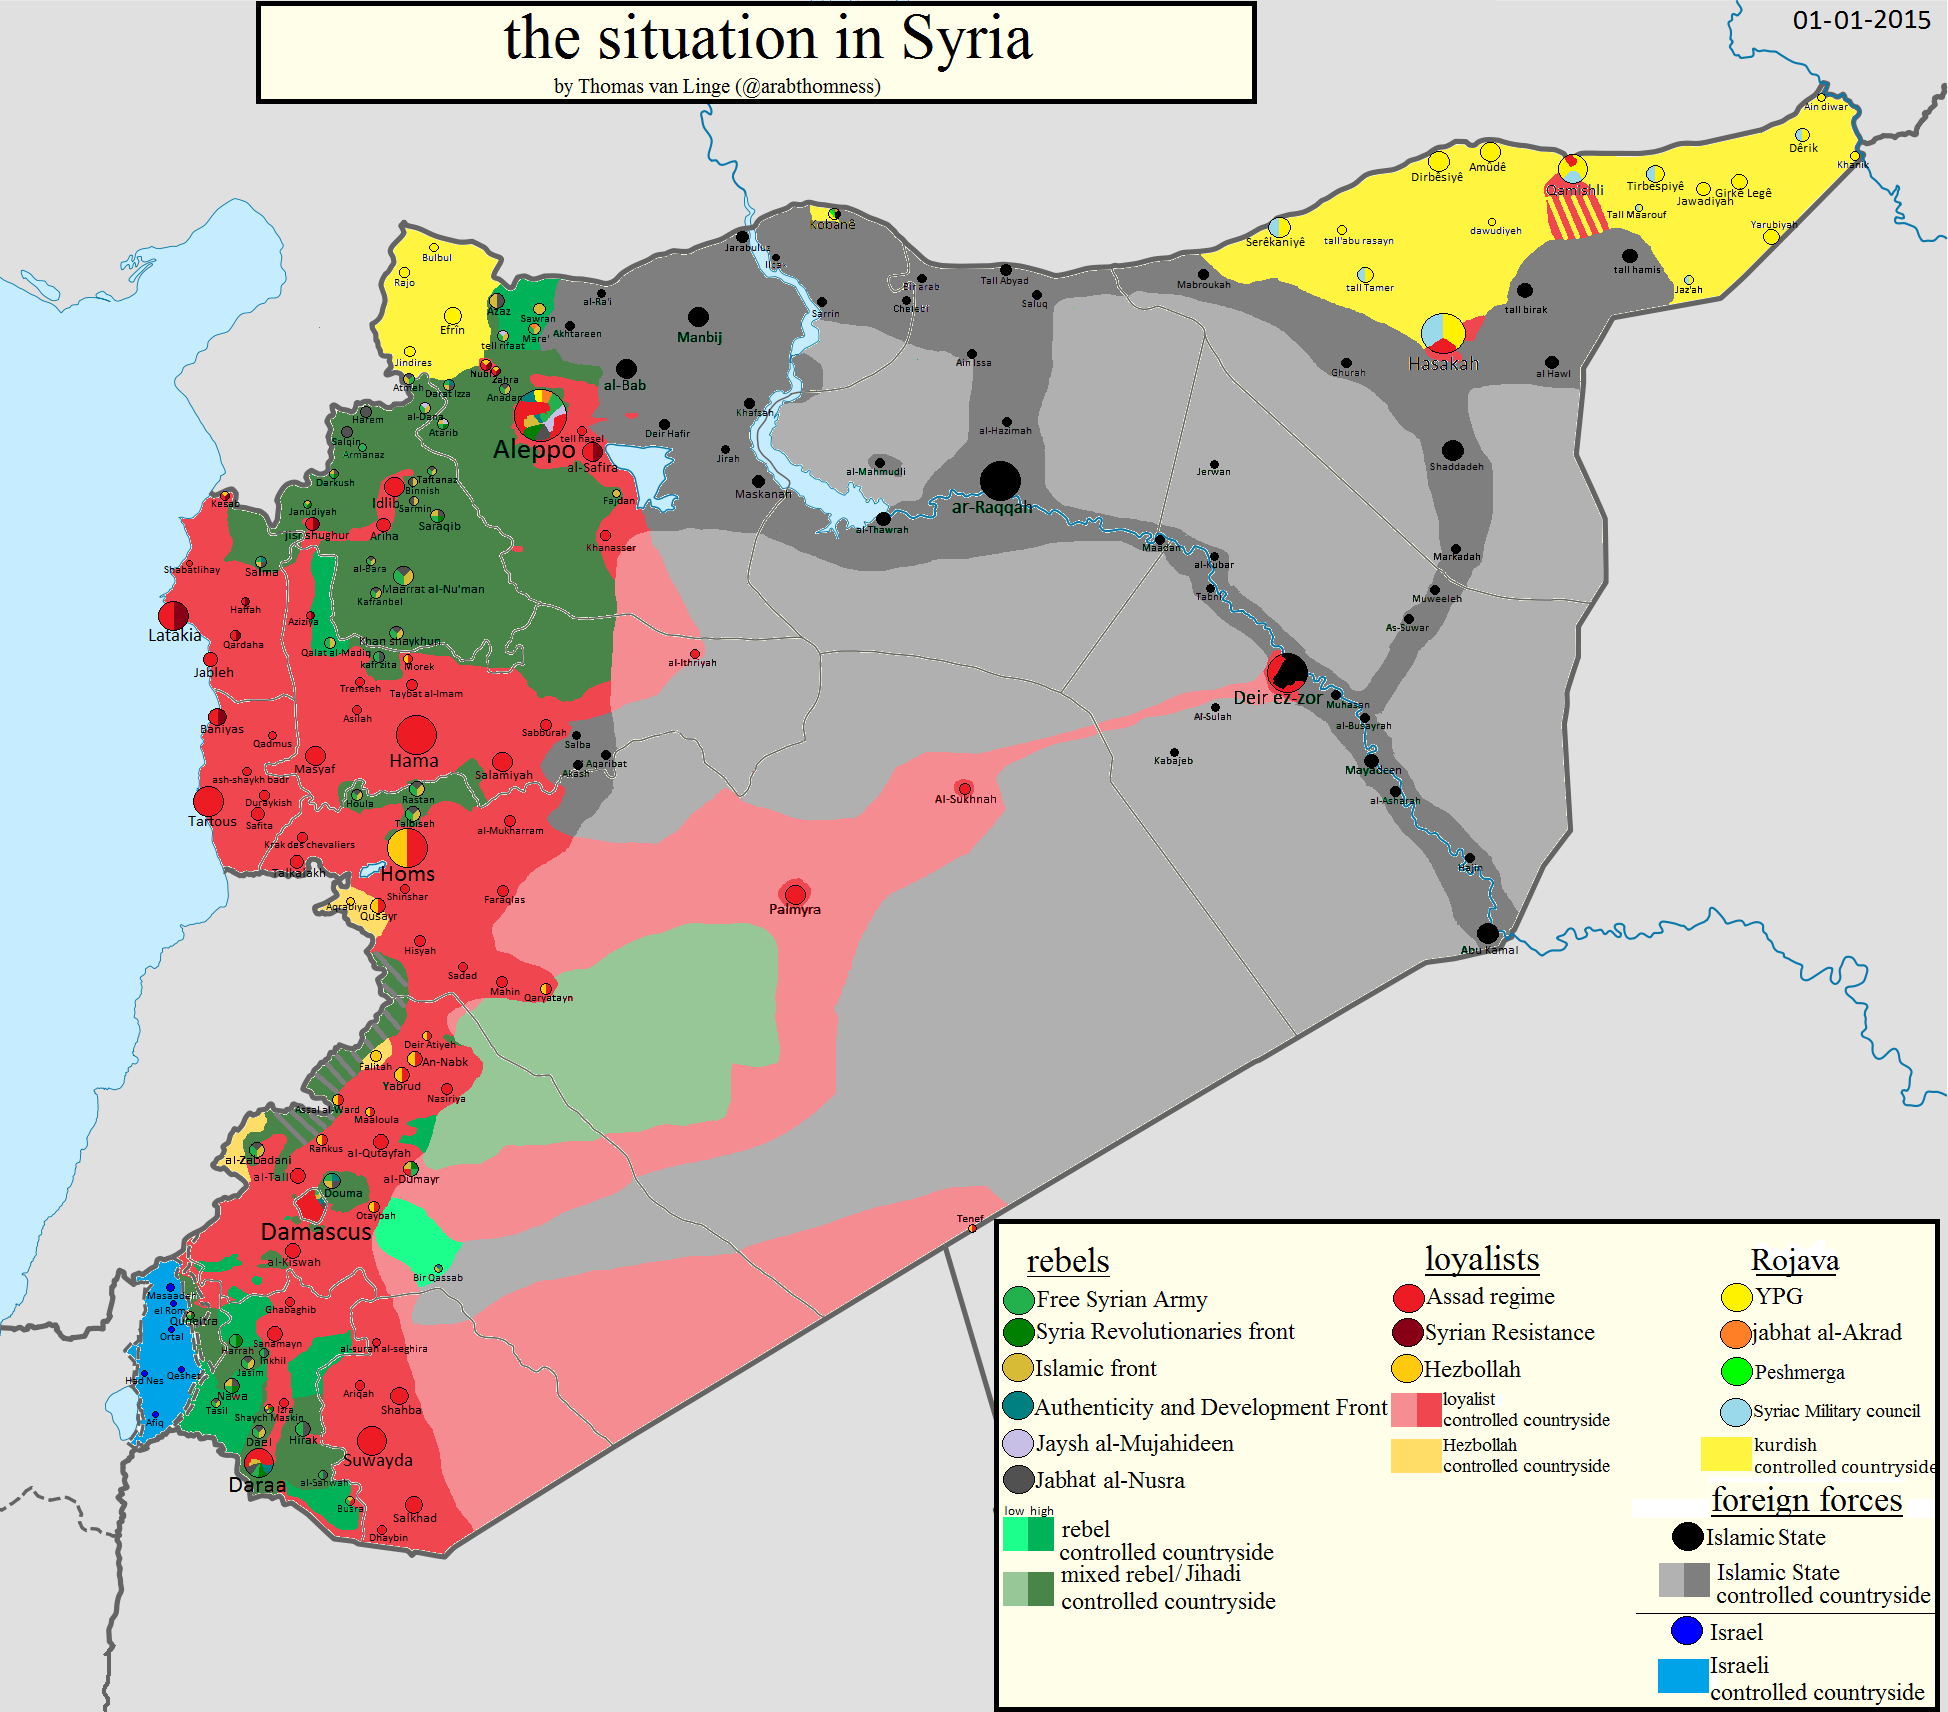 http://www.les-crises.fr/wp-content/uploads/2015/10/31-syrie-01-2015.png